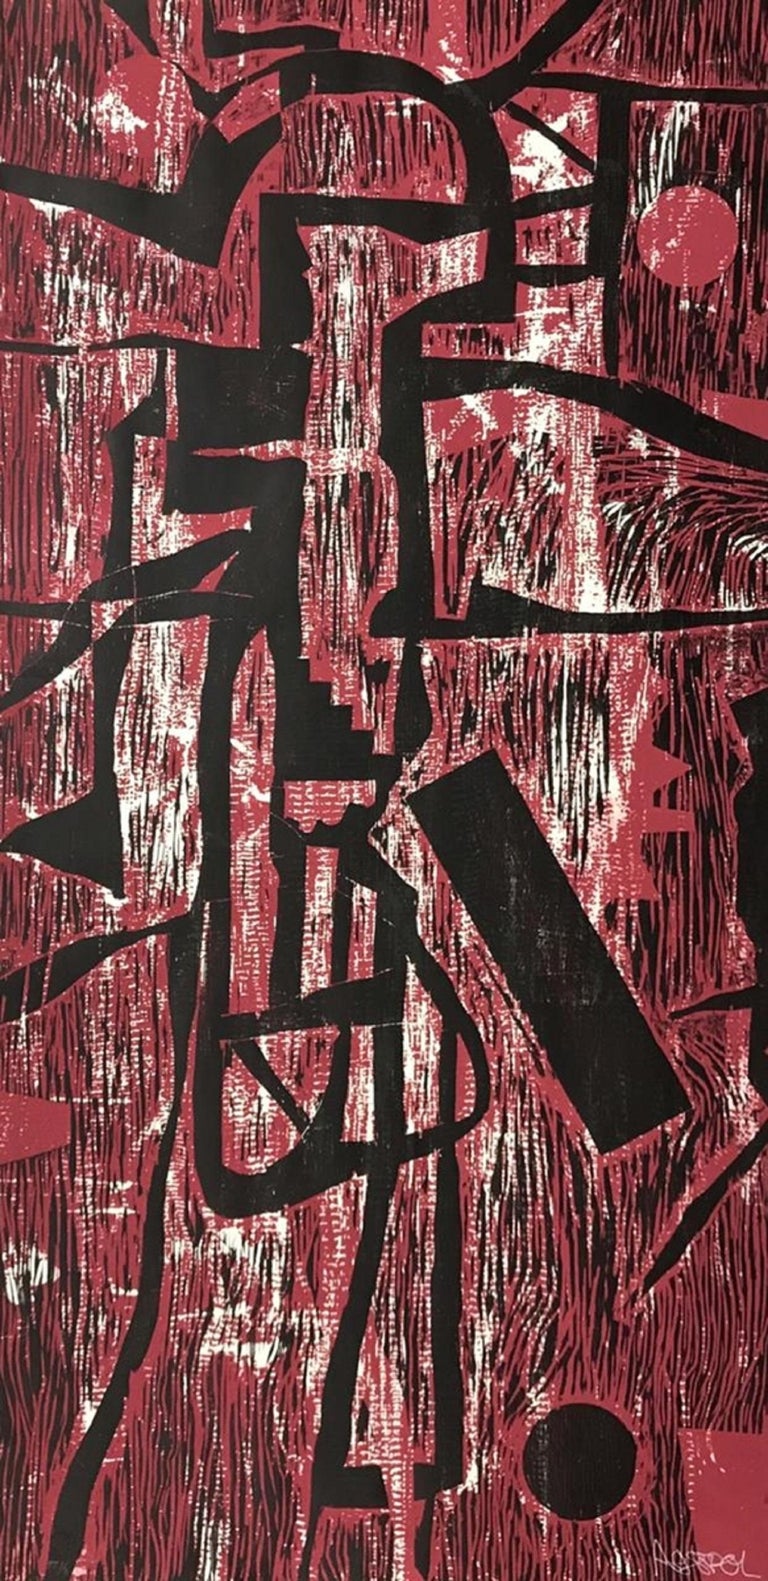 "Alberto Castro Leñero (Mexico, 1951)
'Sin título IV', 2019
woodcut, silkscreen on paper Velin Arches 300 g.
63 x 31.5 in. (160 x 80 cm.)
Edition of 30
ID: CAL-104"